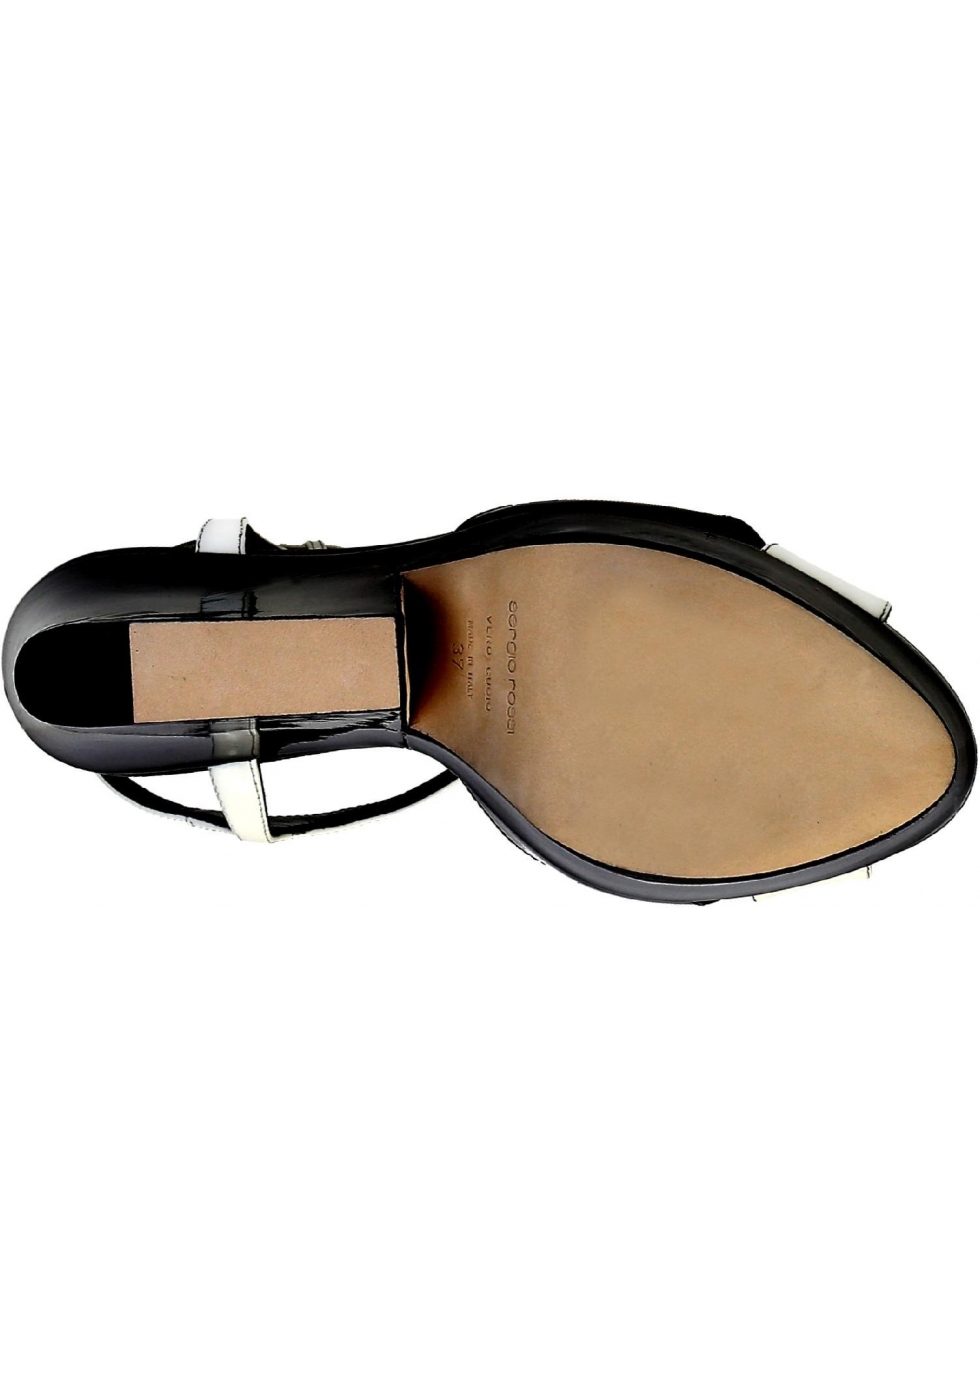 Sergio Rossi black Patent Leather sandals with platform - Italian Boutique